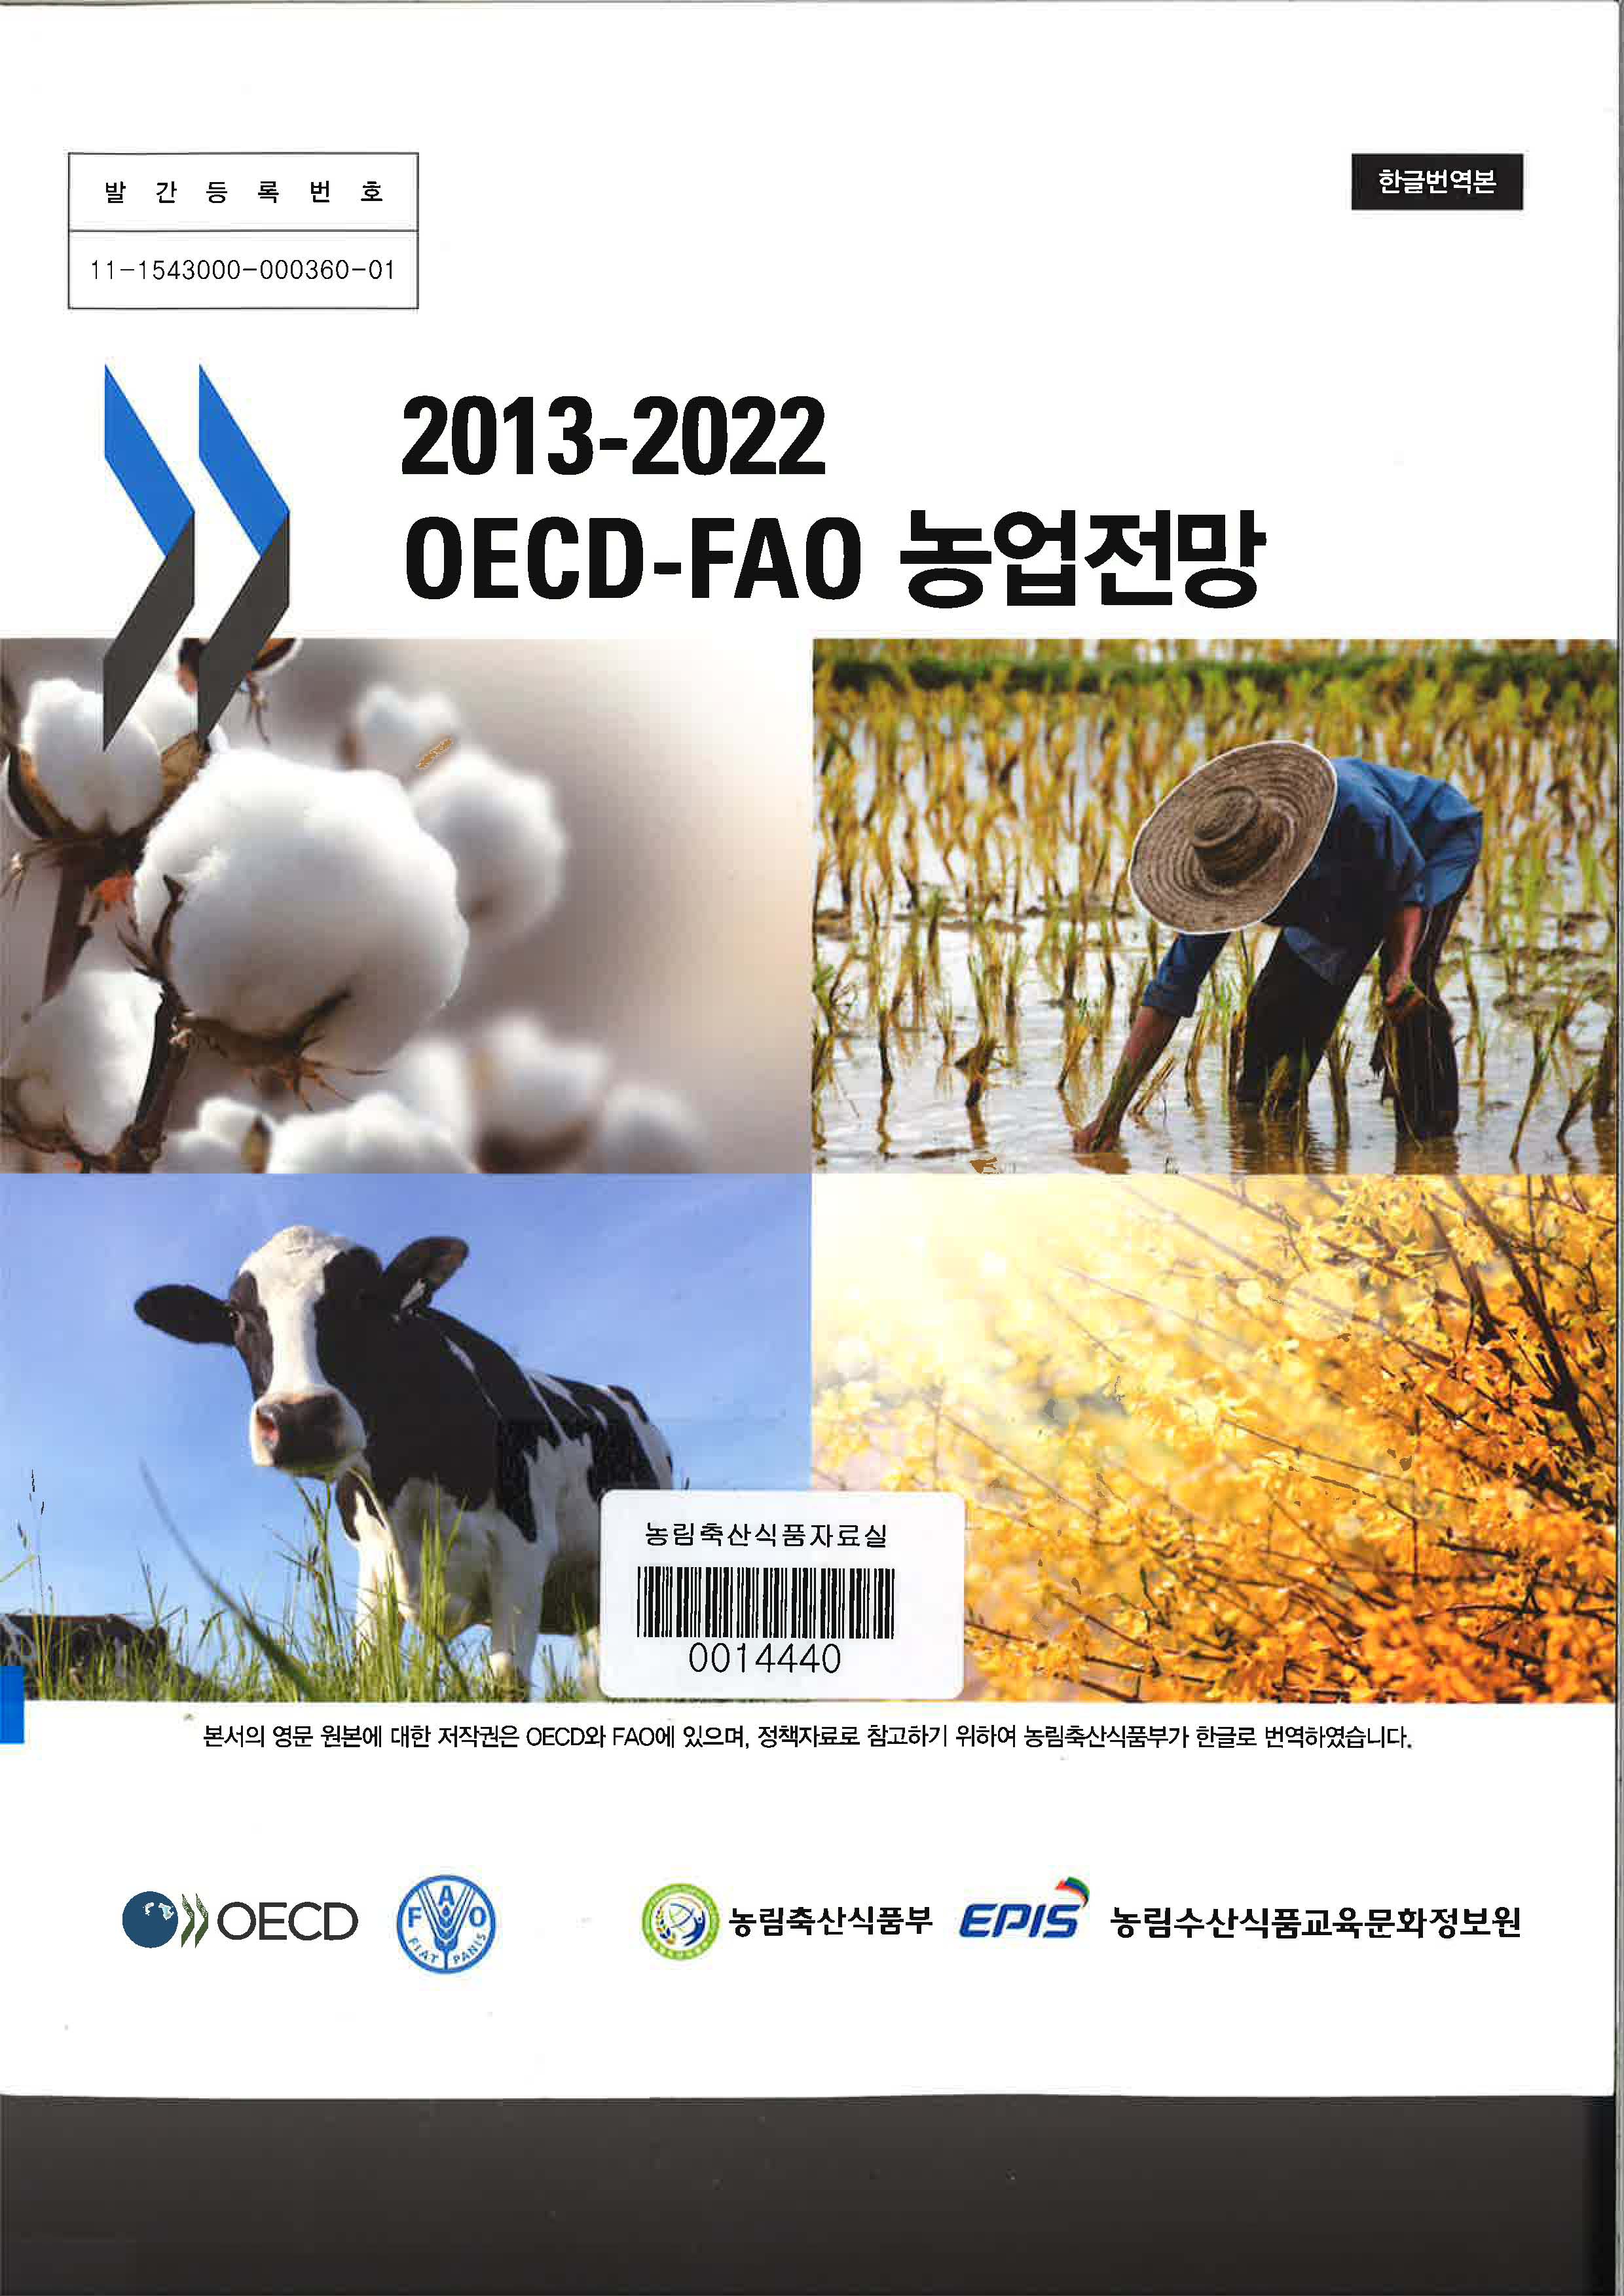 2013-2022 OECD-FAO 농업전망